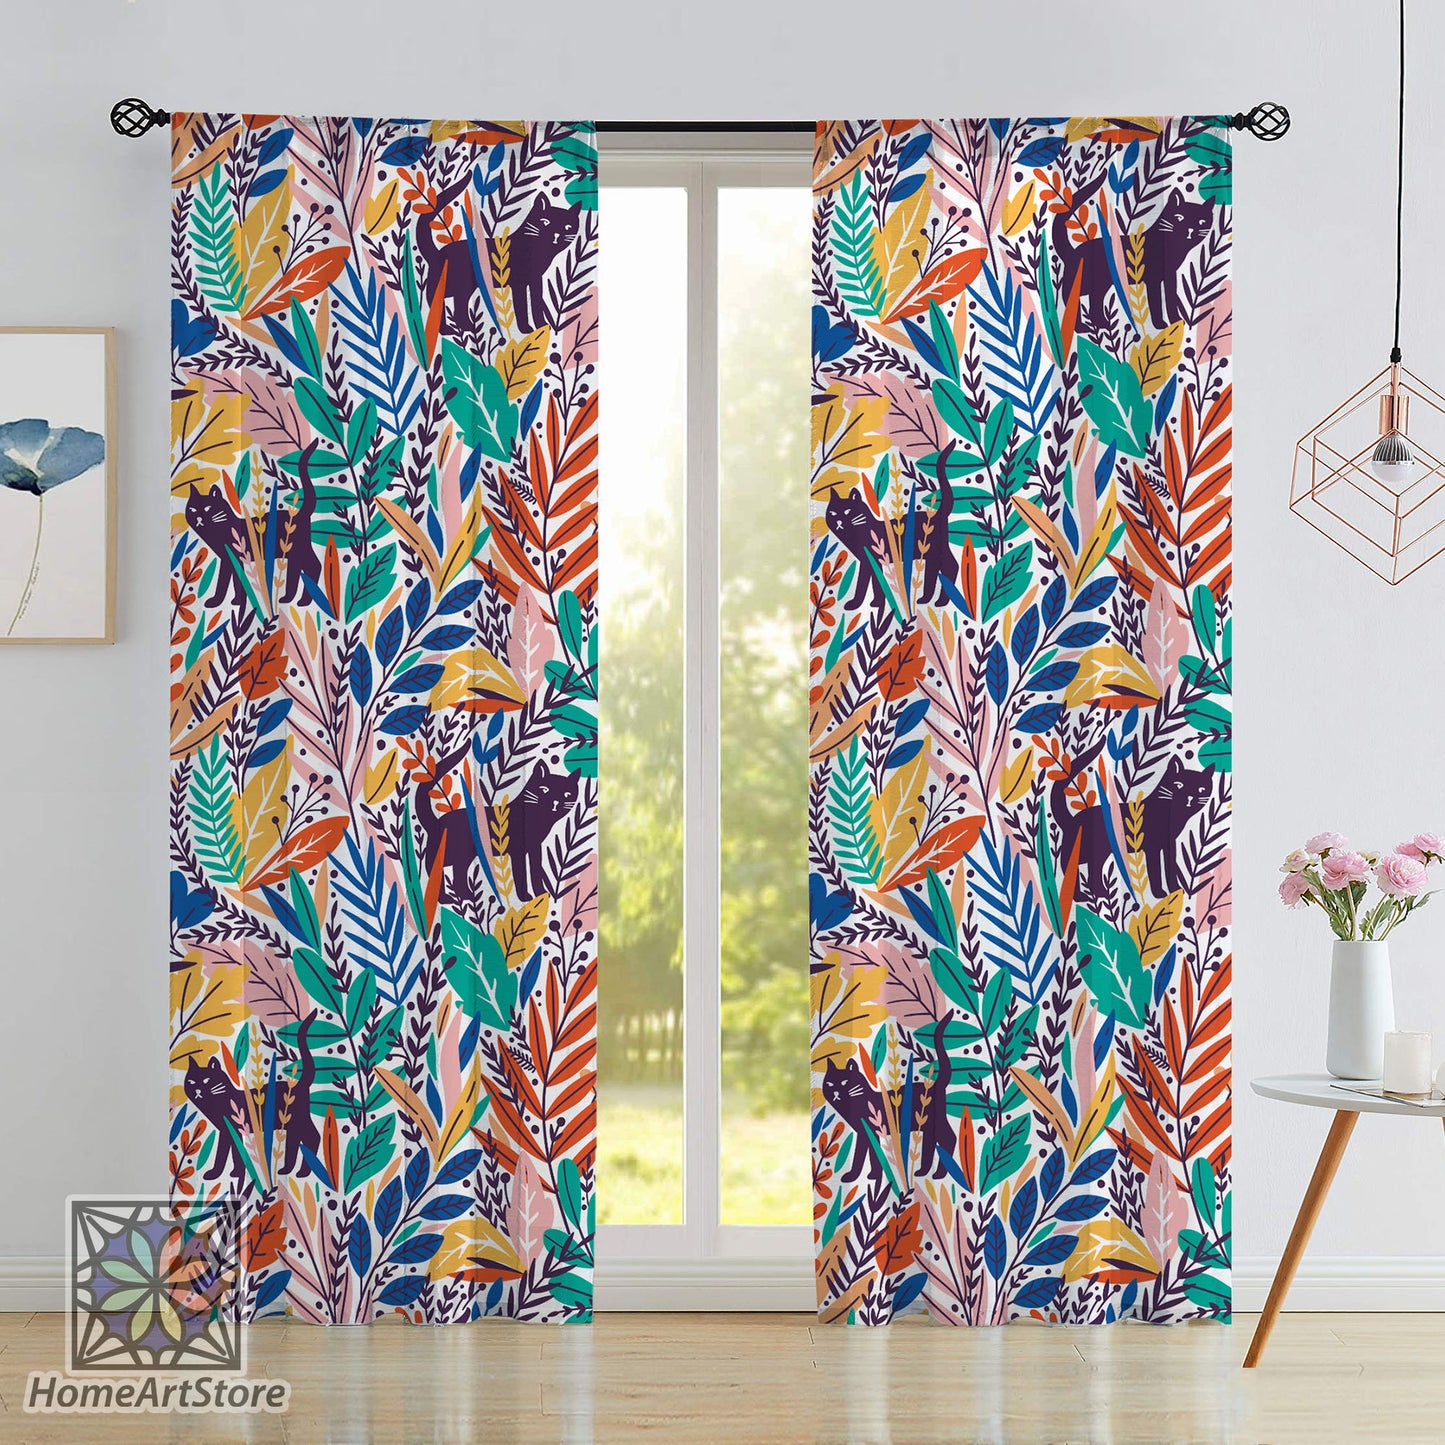 Tropical Leaves Curtain, Jungle Curtain, Colorful Floral Curtain, Bohemian Decor, Living Room Curtain, Boho Curtain